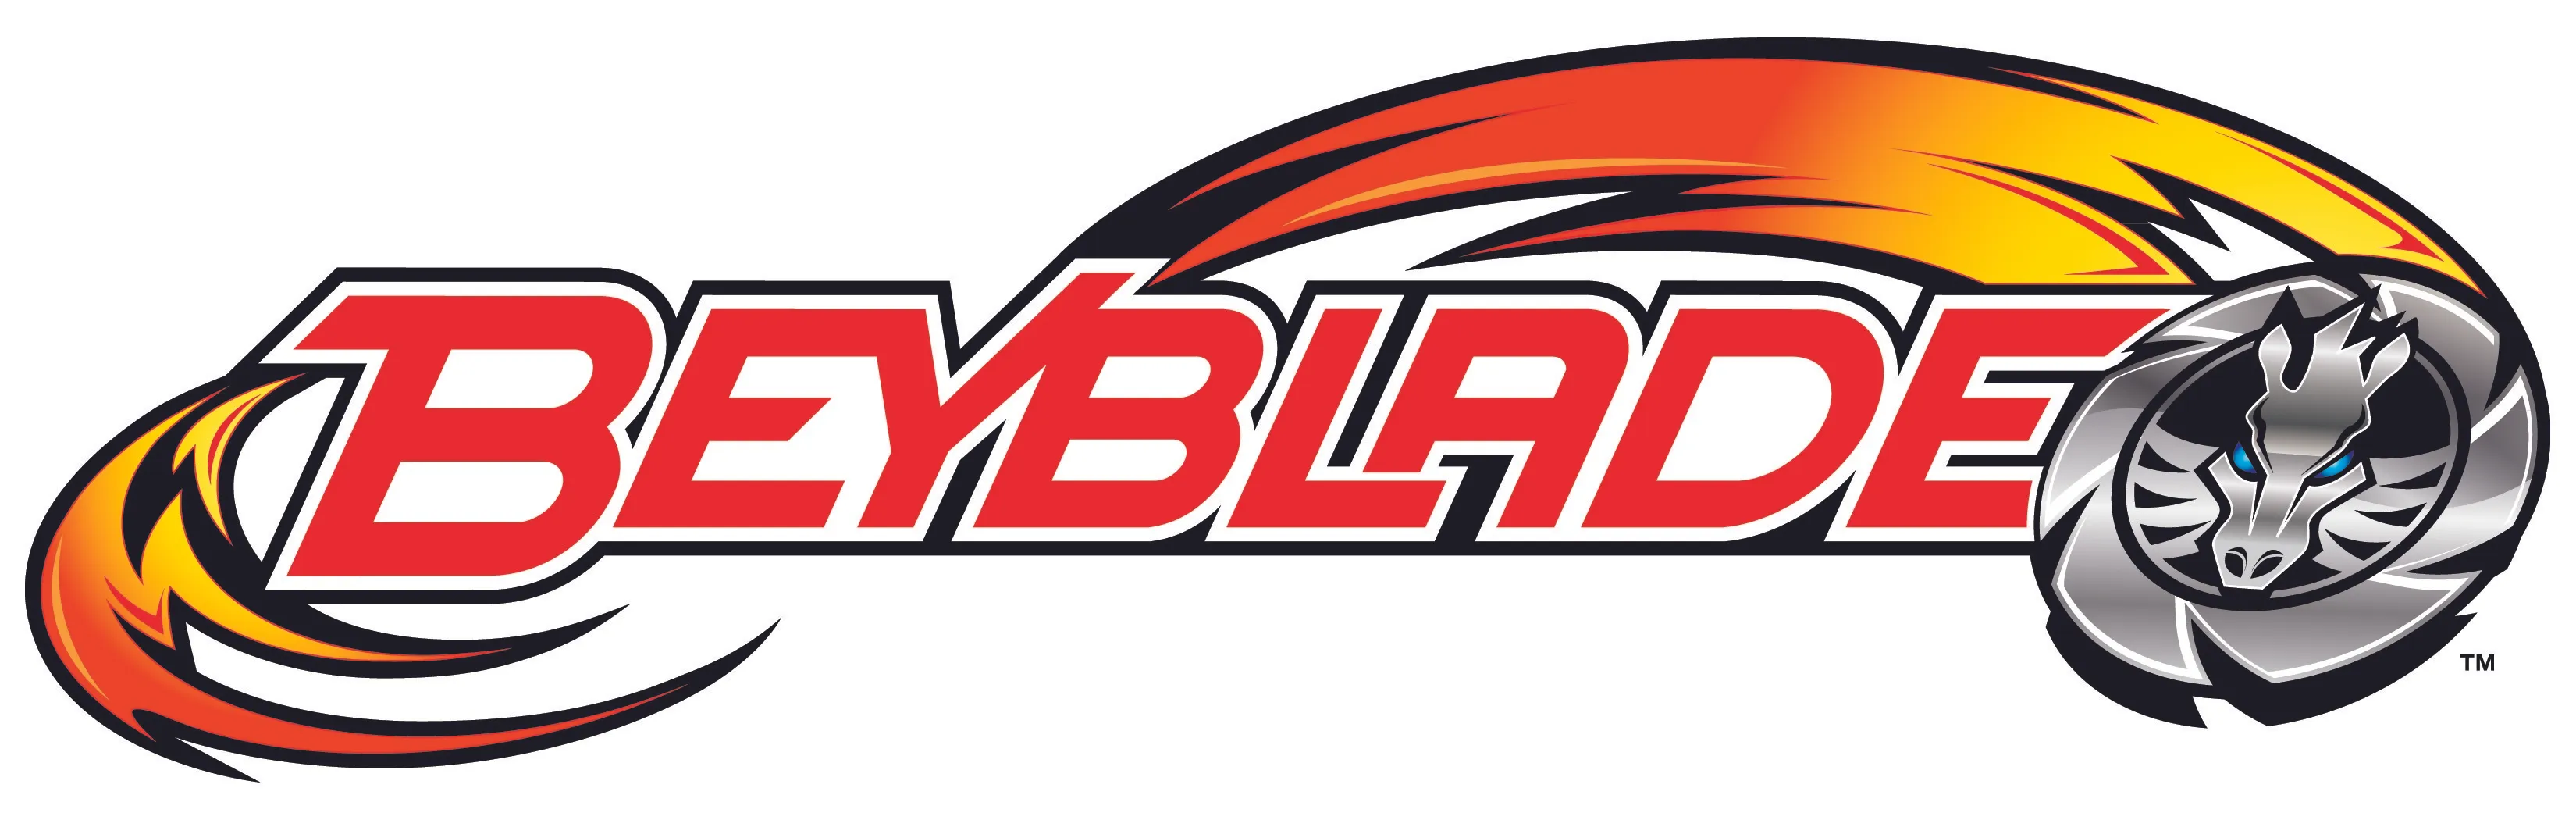 Logo for beyblade